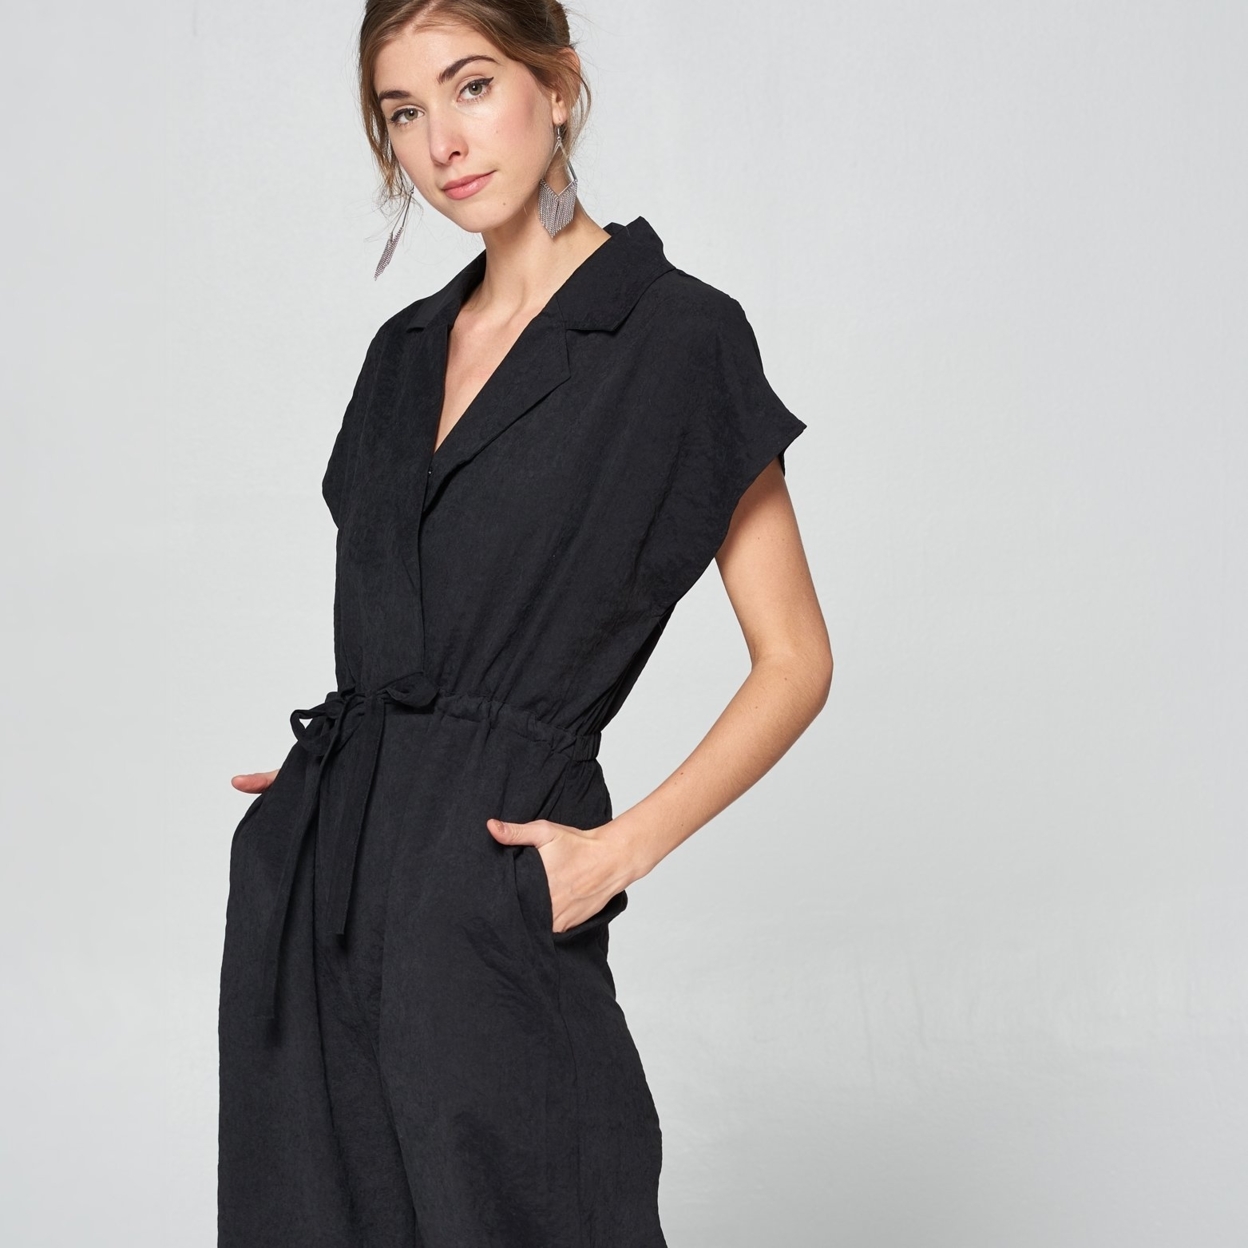 Kimono Cap Sleeve Jumpsuit - Black, Large (12-14)